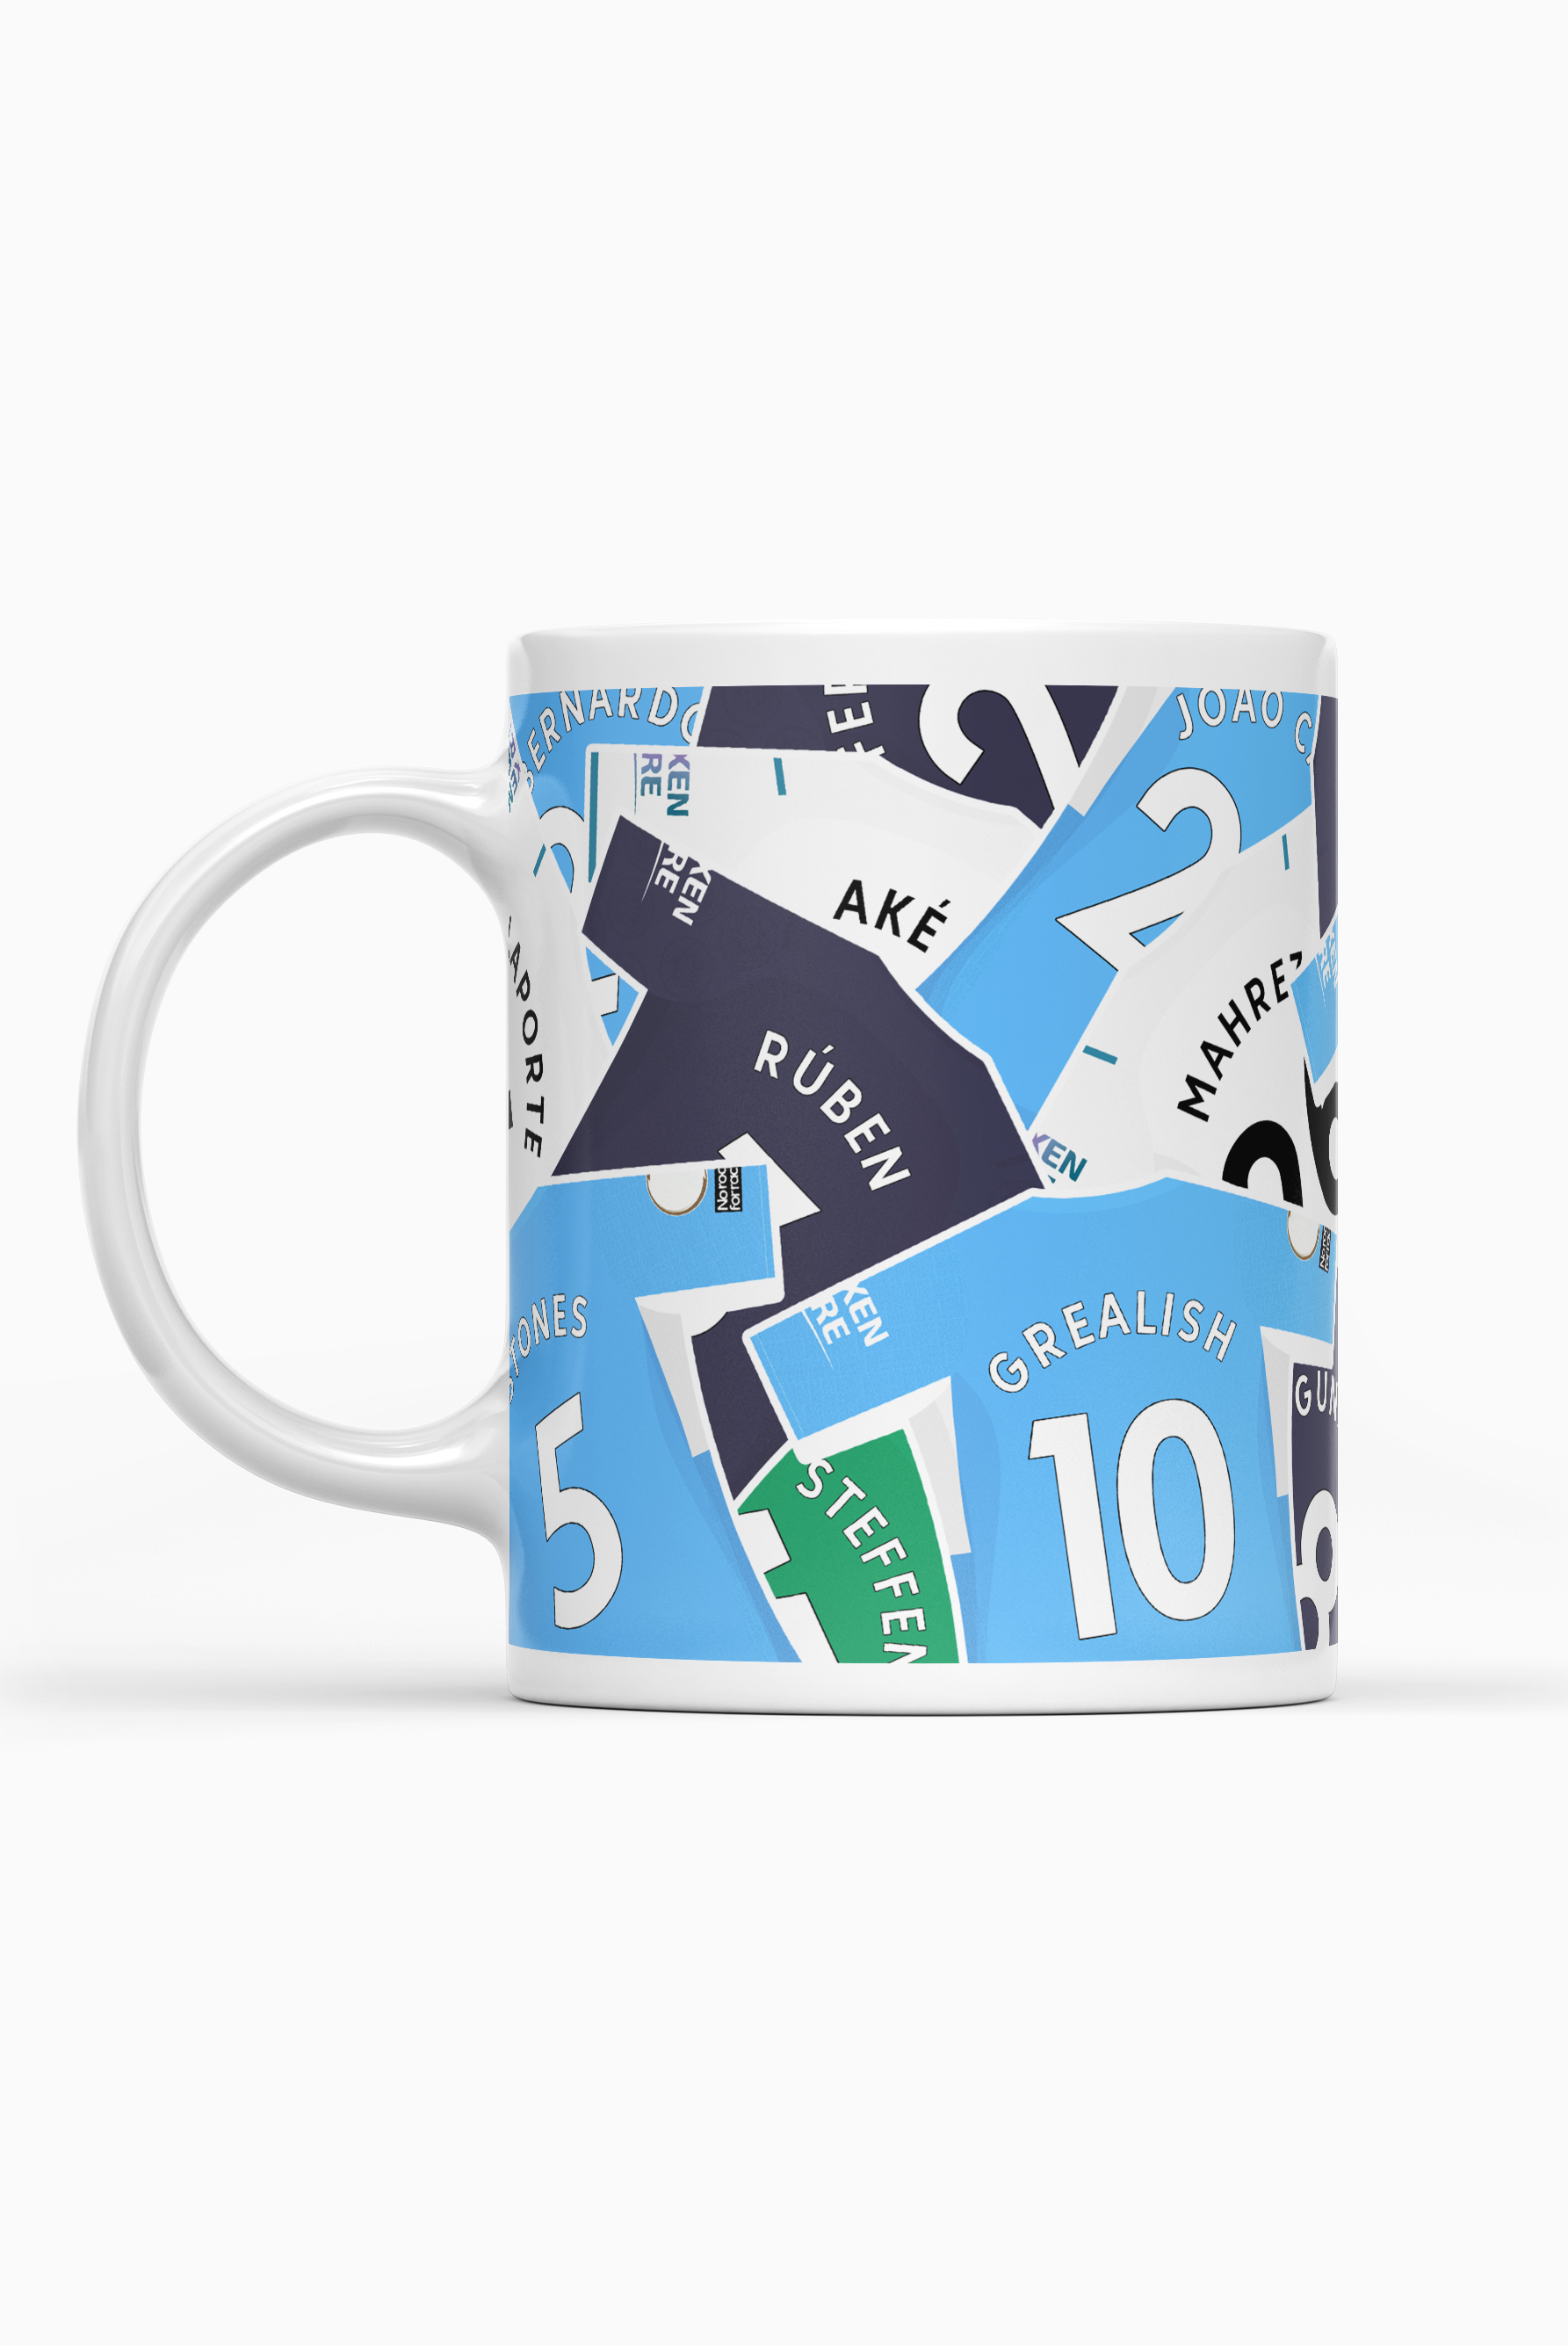 Man City / 2021-22 Squad Mug